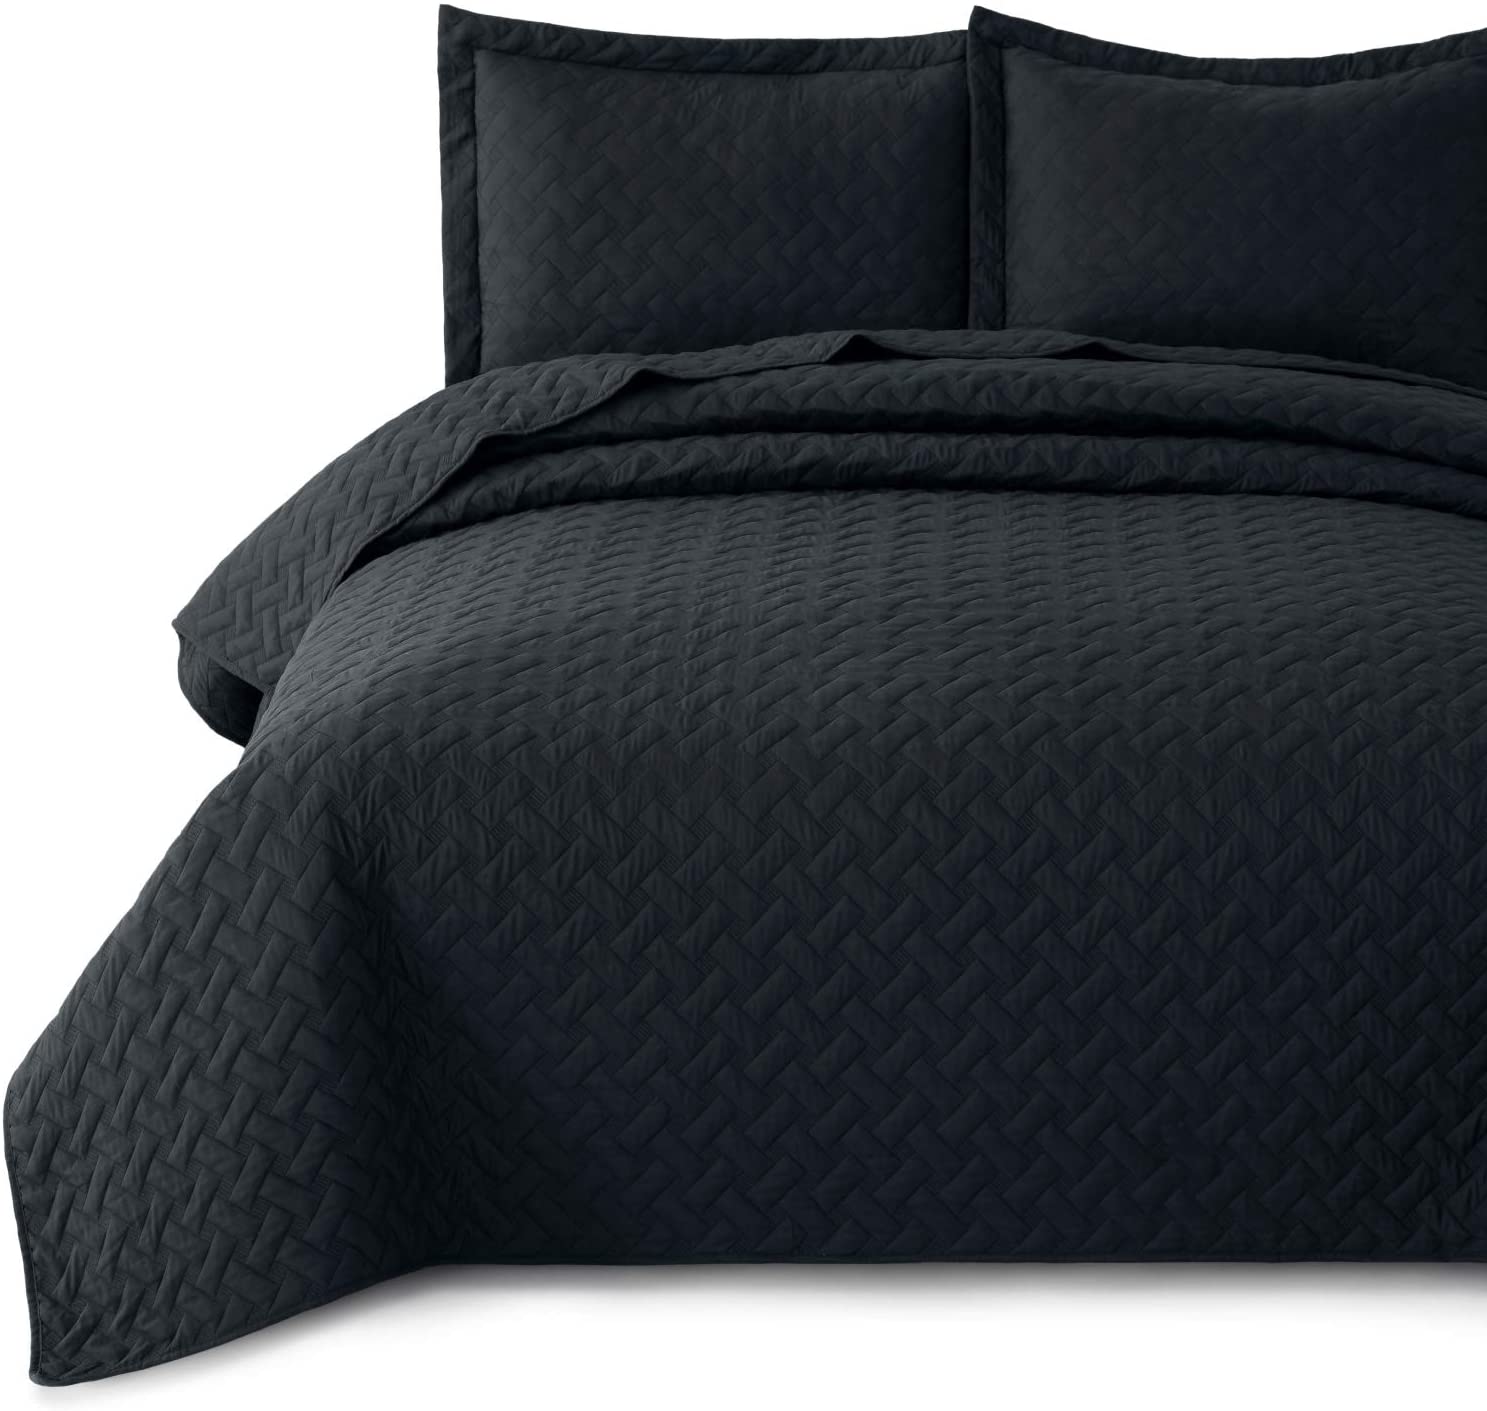 Basket Weave Pattern Bedsprea Details about   Bedsure Quilt Set Grey King Size 106x96 inches 